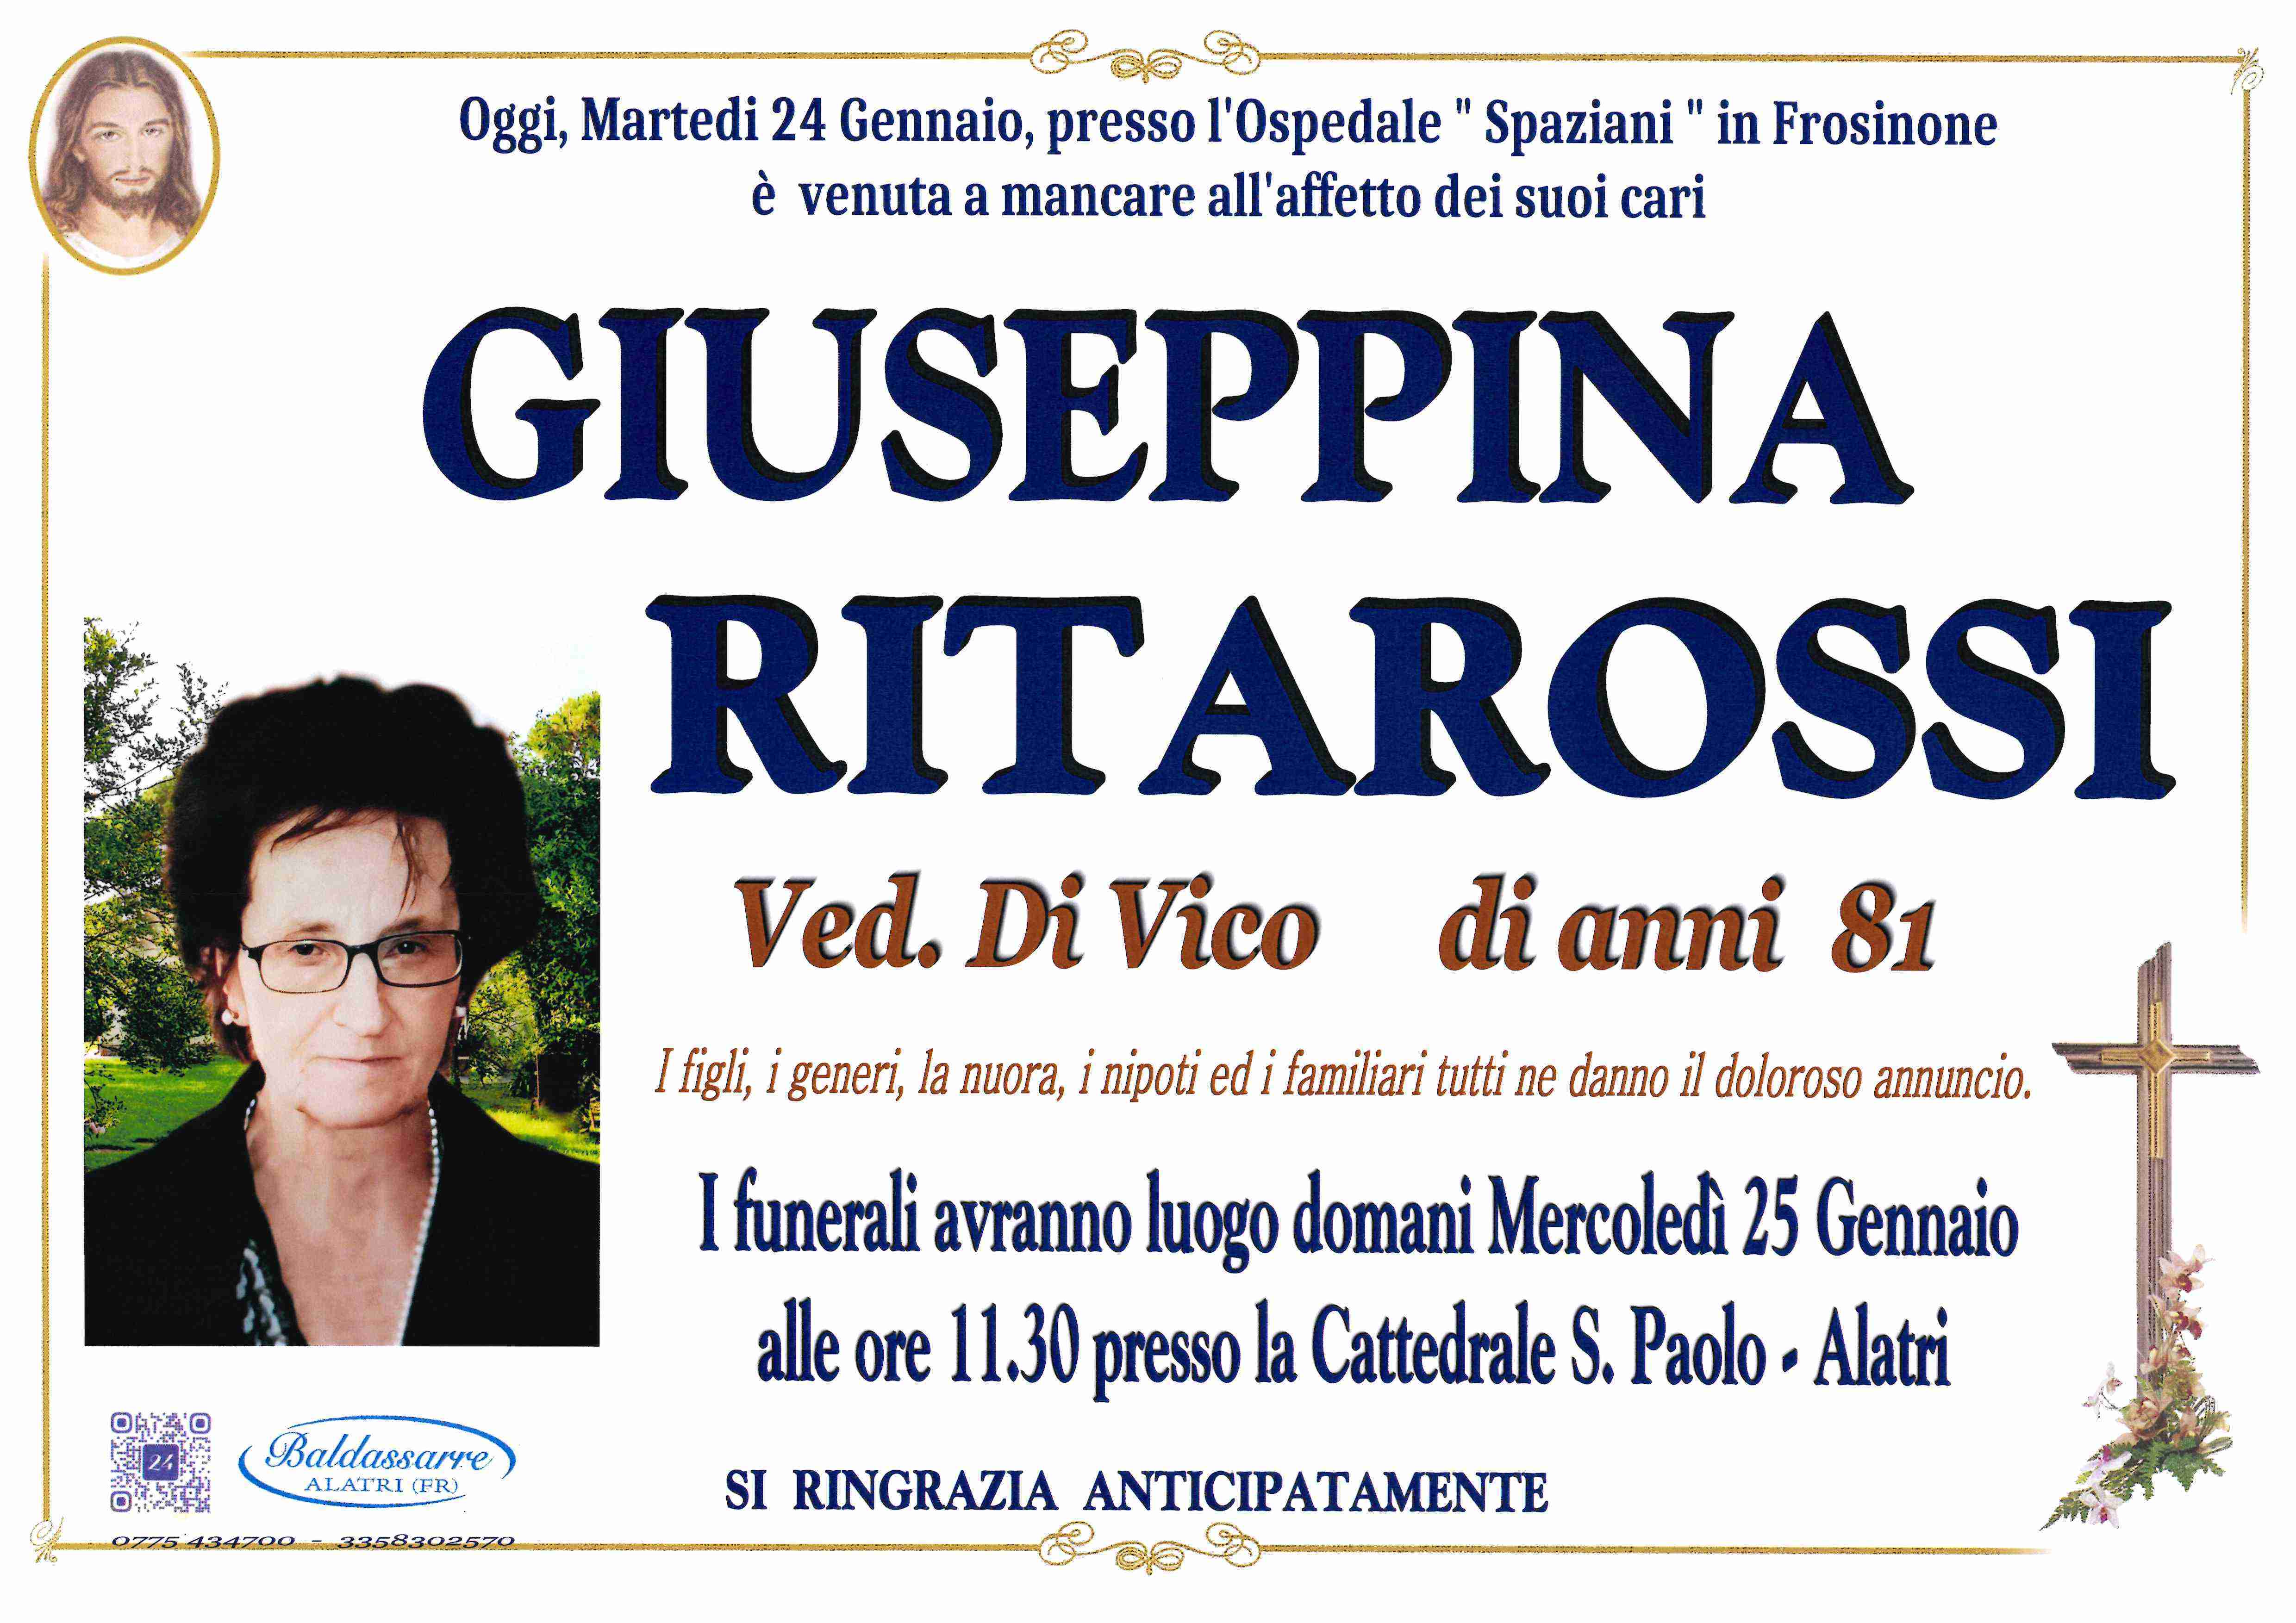 Giuseppina Ritarossi